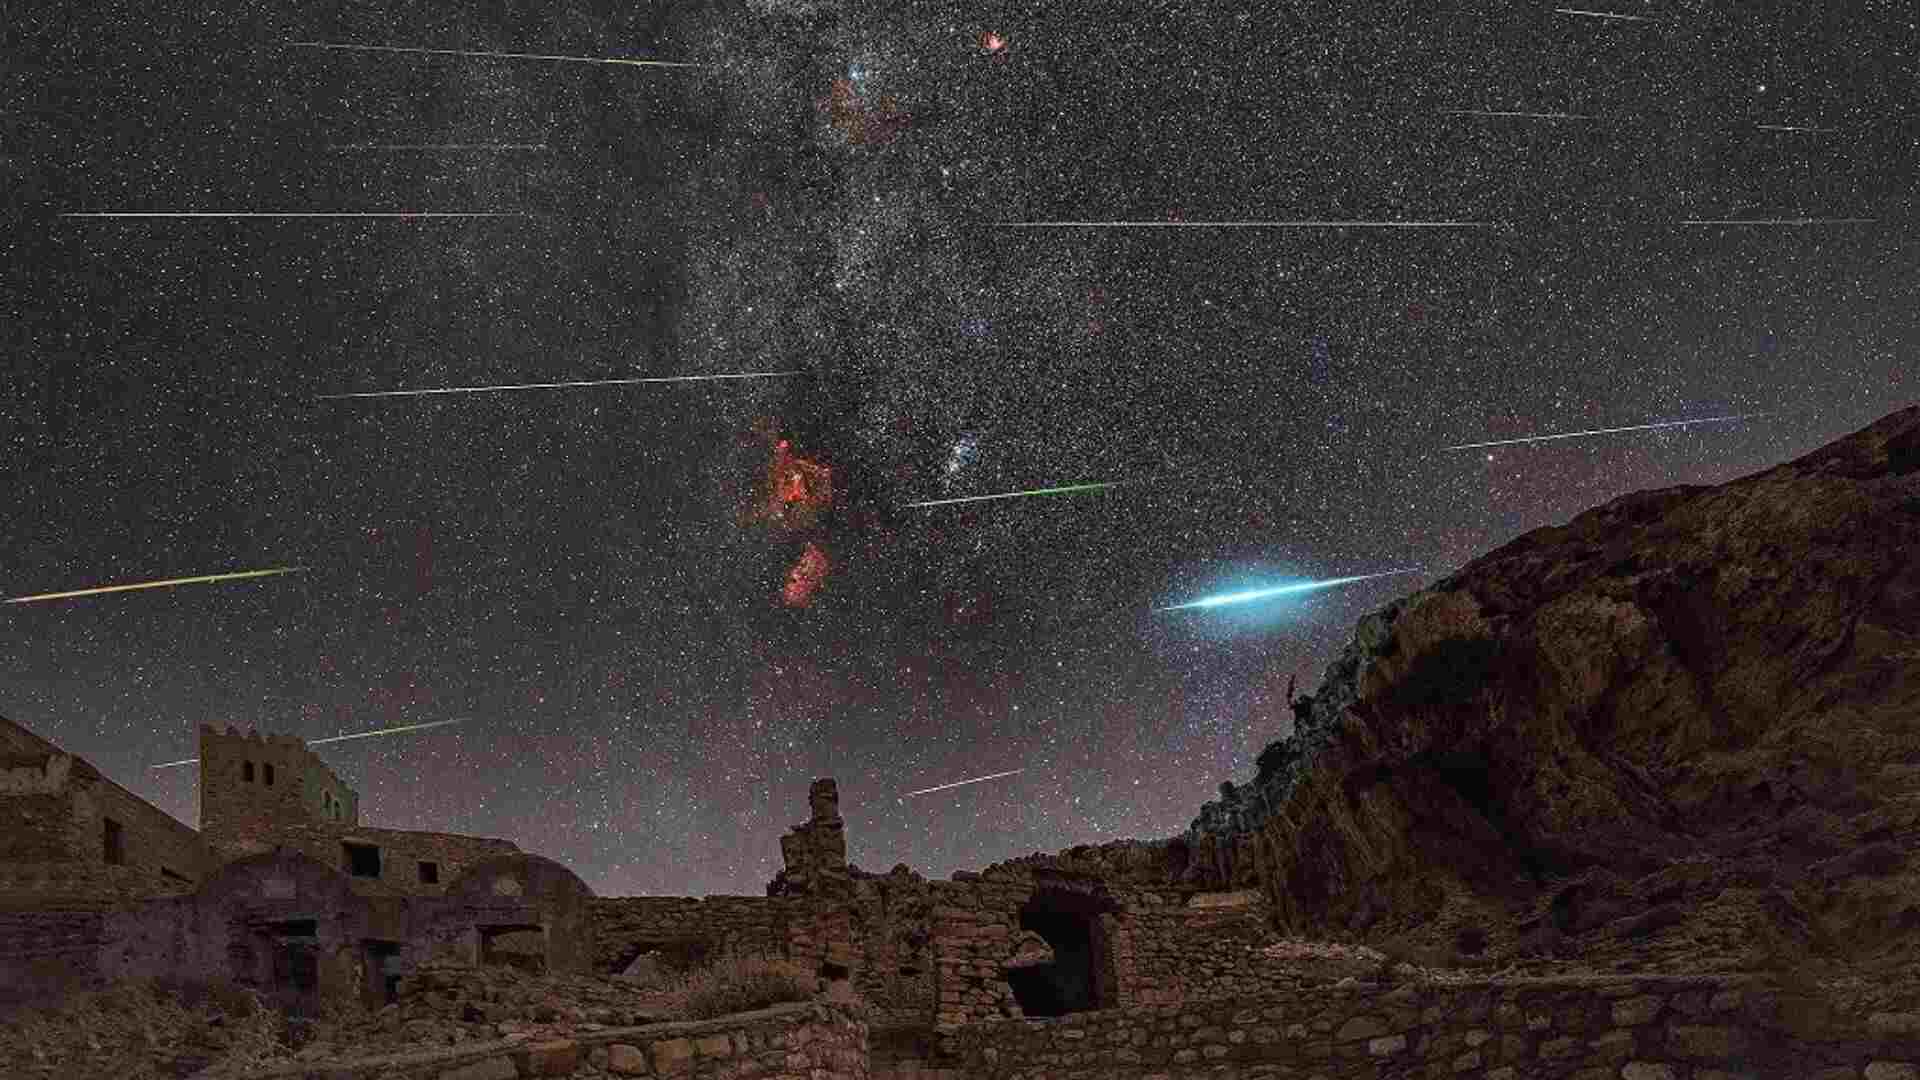 Makrem Larnaout captured the Southern Delta Aquariid meteor shower in late July 2022 near the ancient Berber village of Zriba El Alia in Tunisia